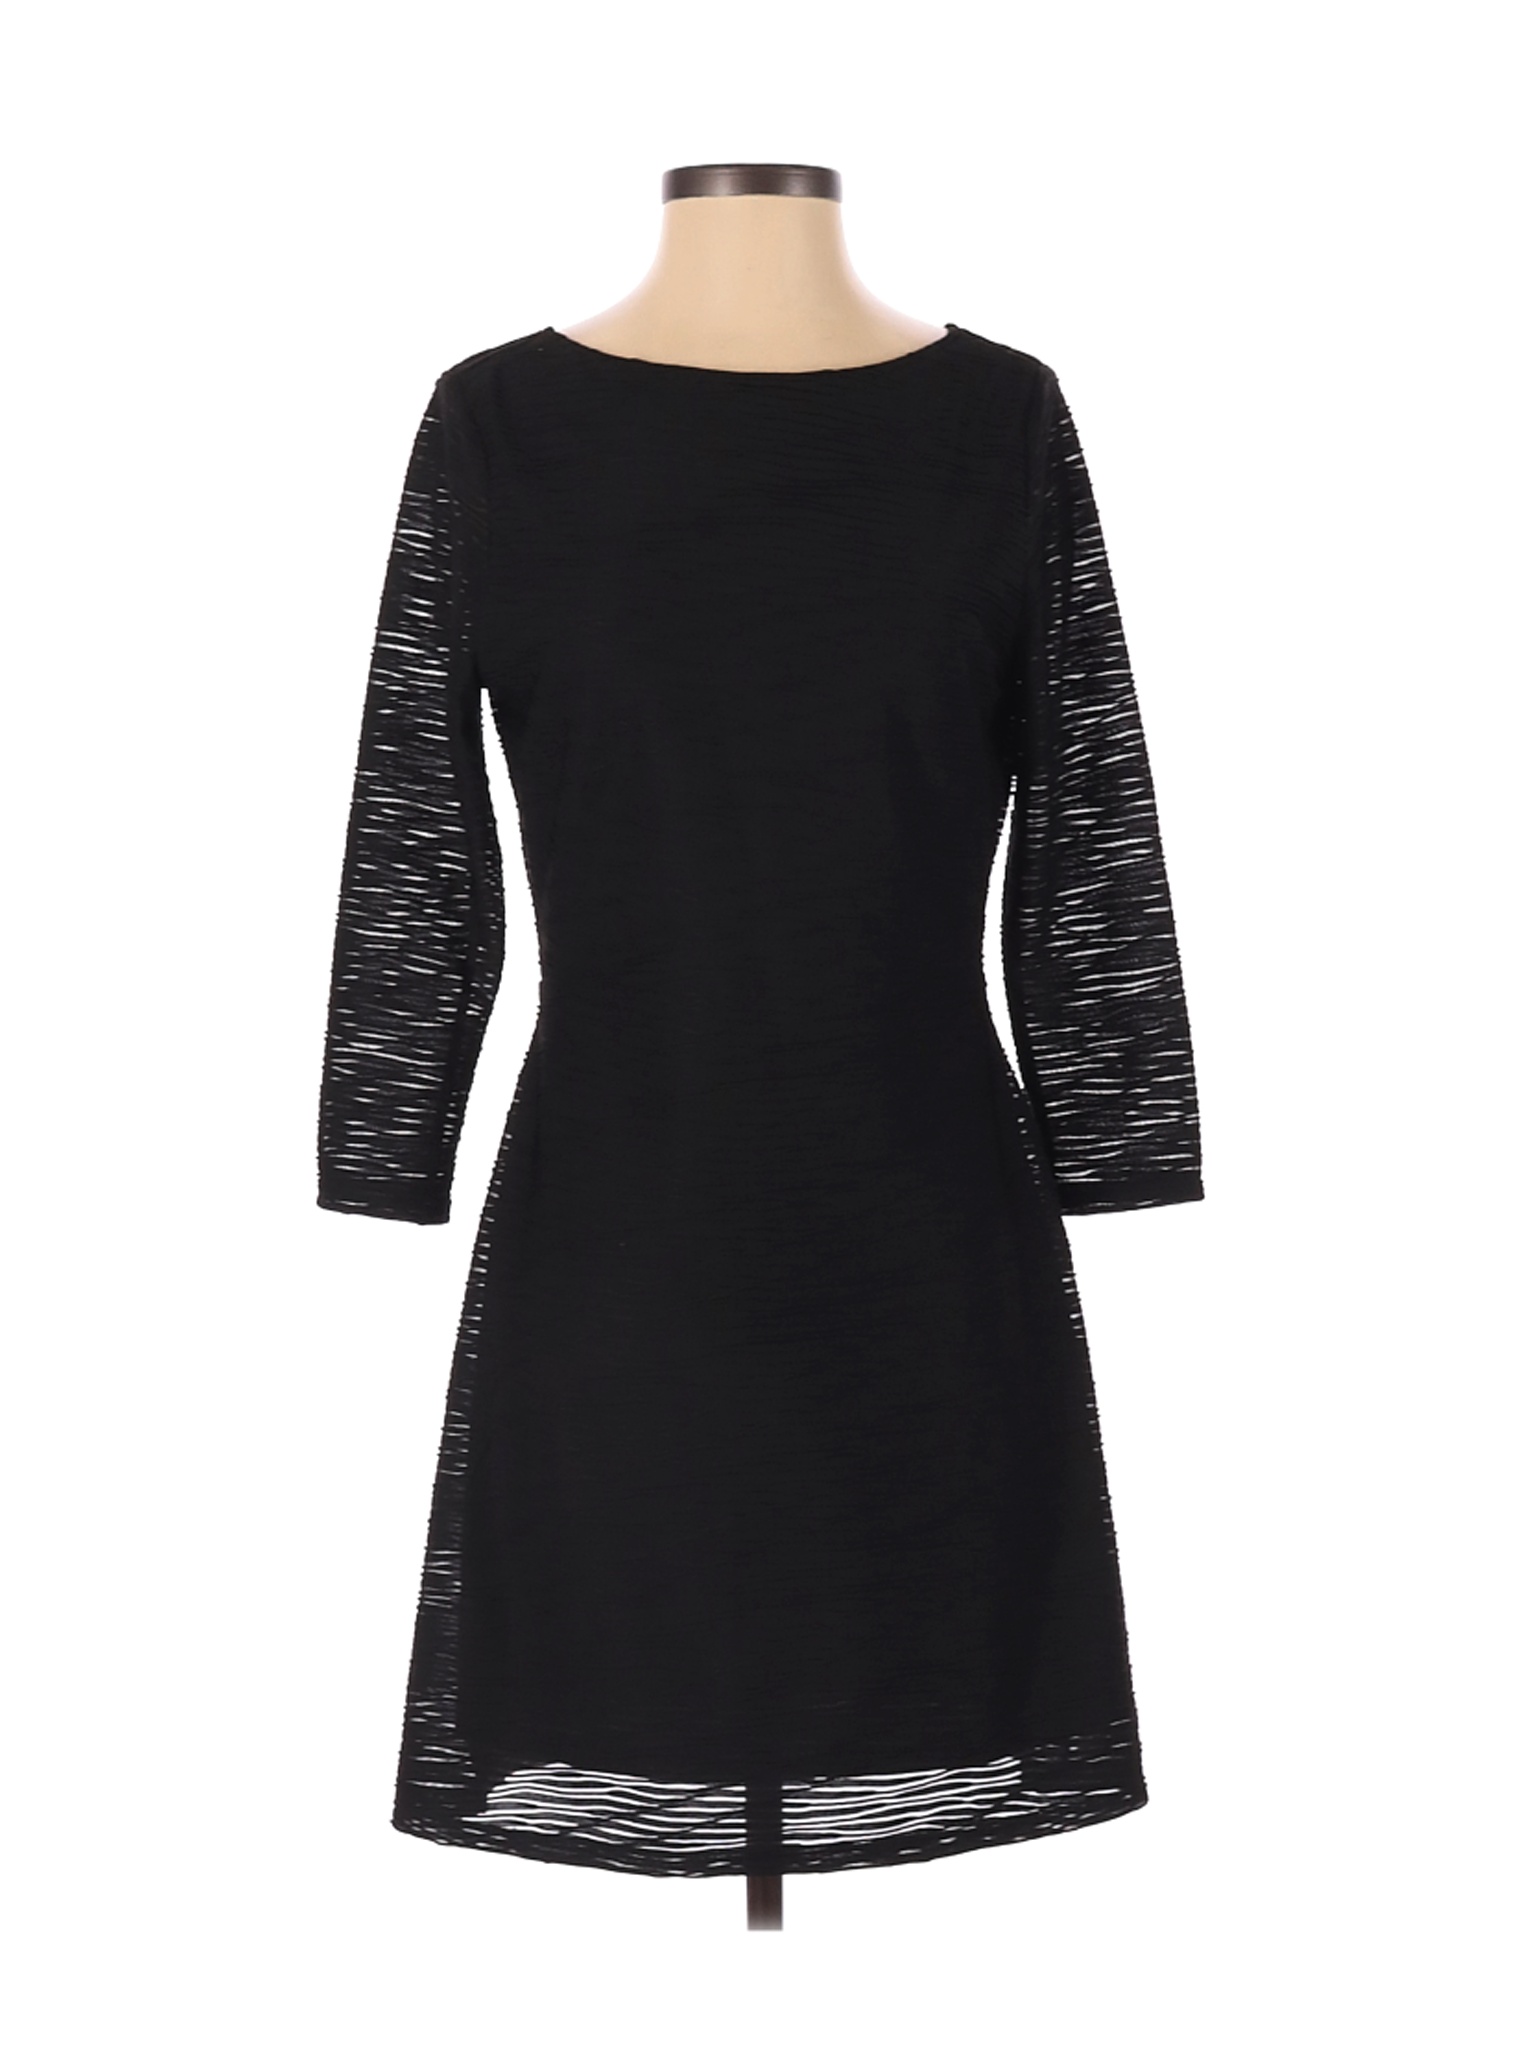 Gianni Bini Women Black Casual Dress S | eBay